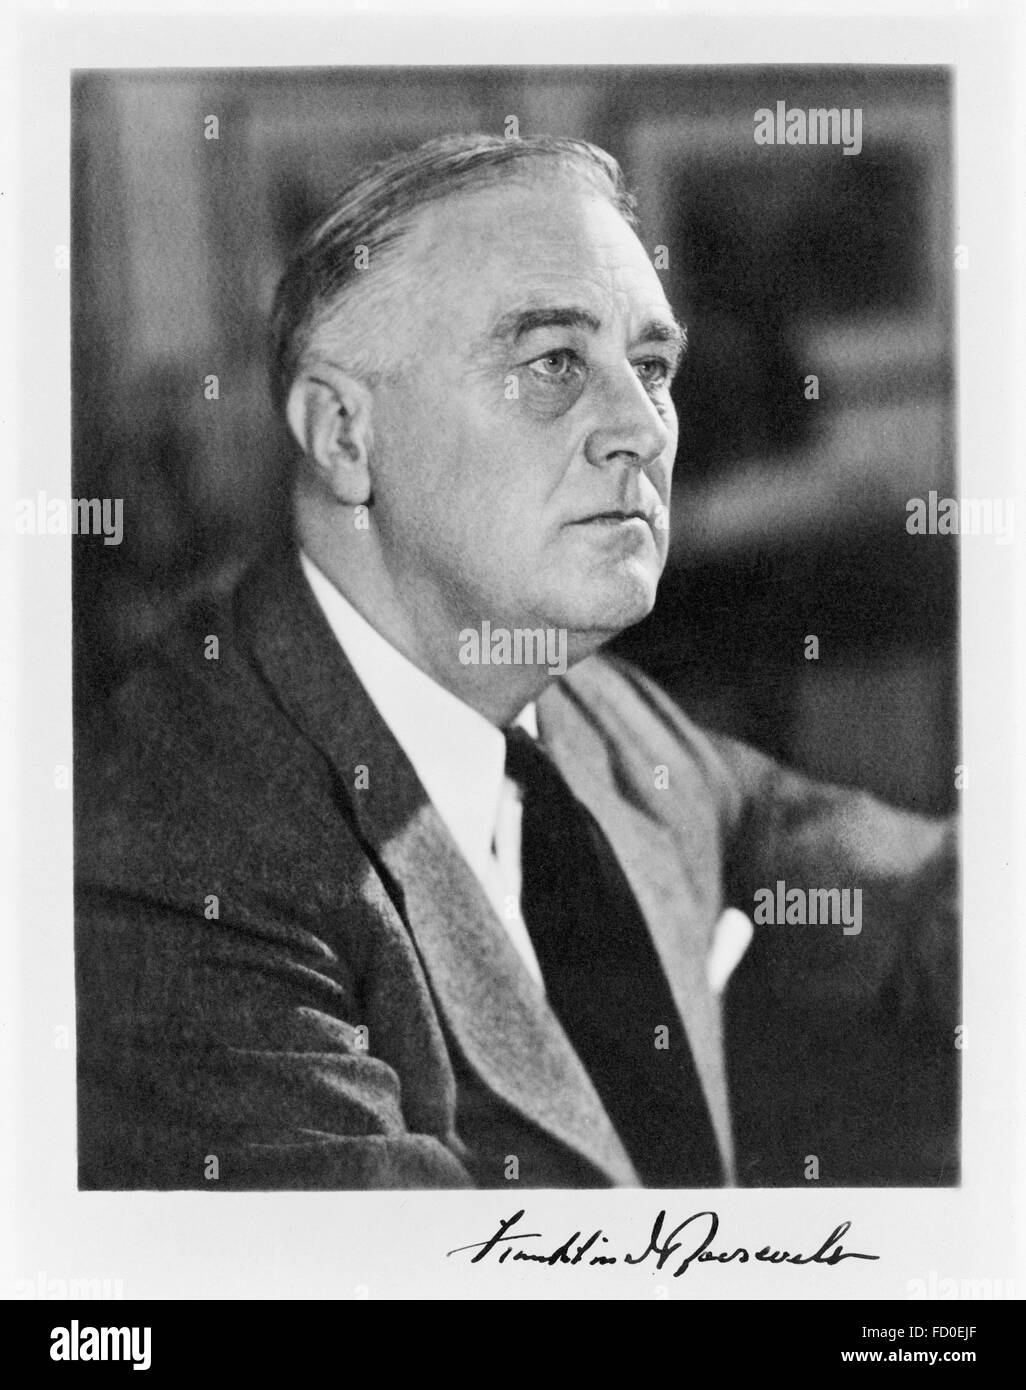 Franklin D Roosevelt. Porträt des Franklin D Roosevelt, der 32. Präsident der USA, c. 1941 unterzeichnet Stockfoto